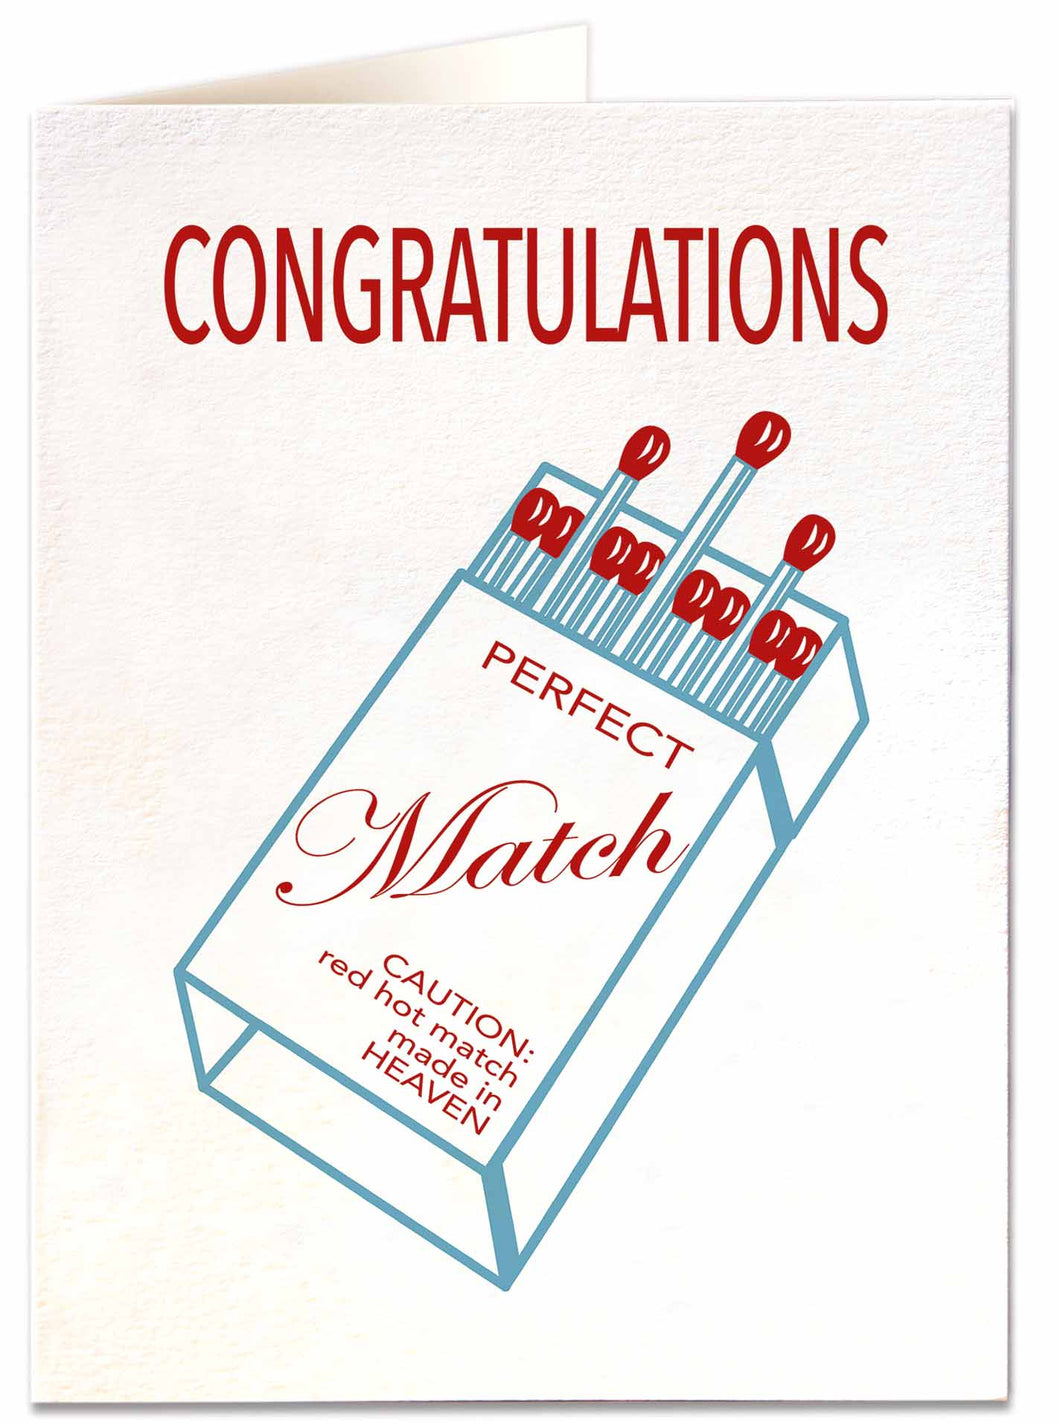 Congratulations - The Perfect Match